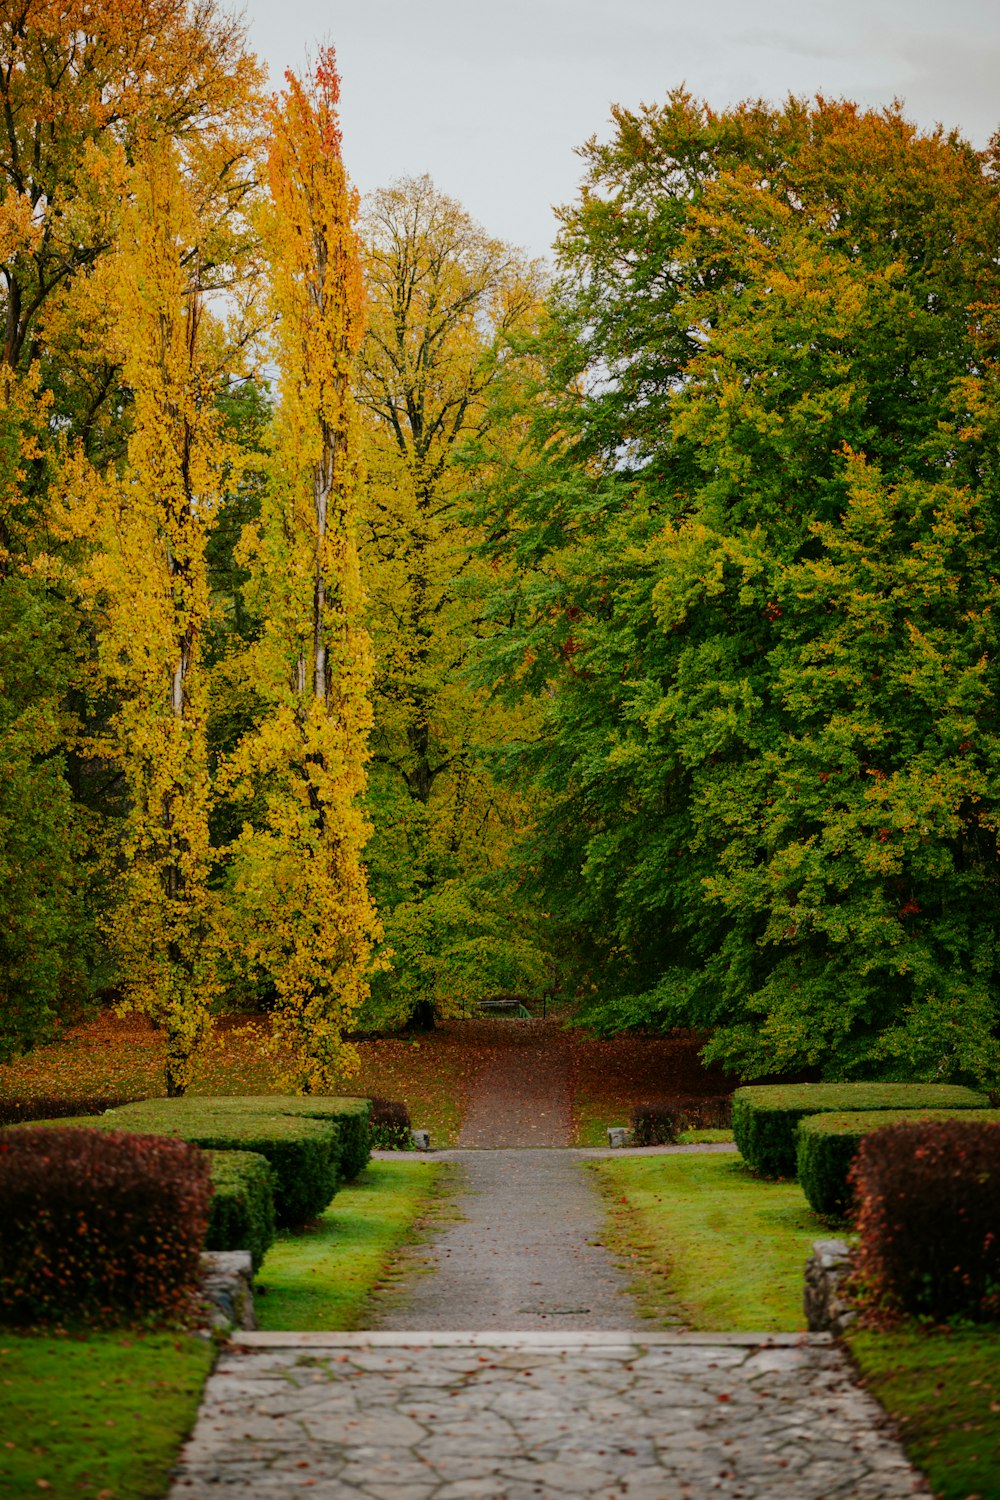 a stone path leading through a lush green forest